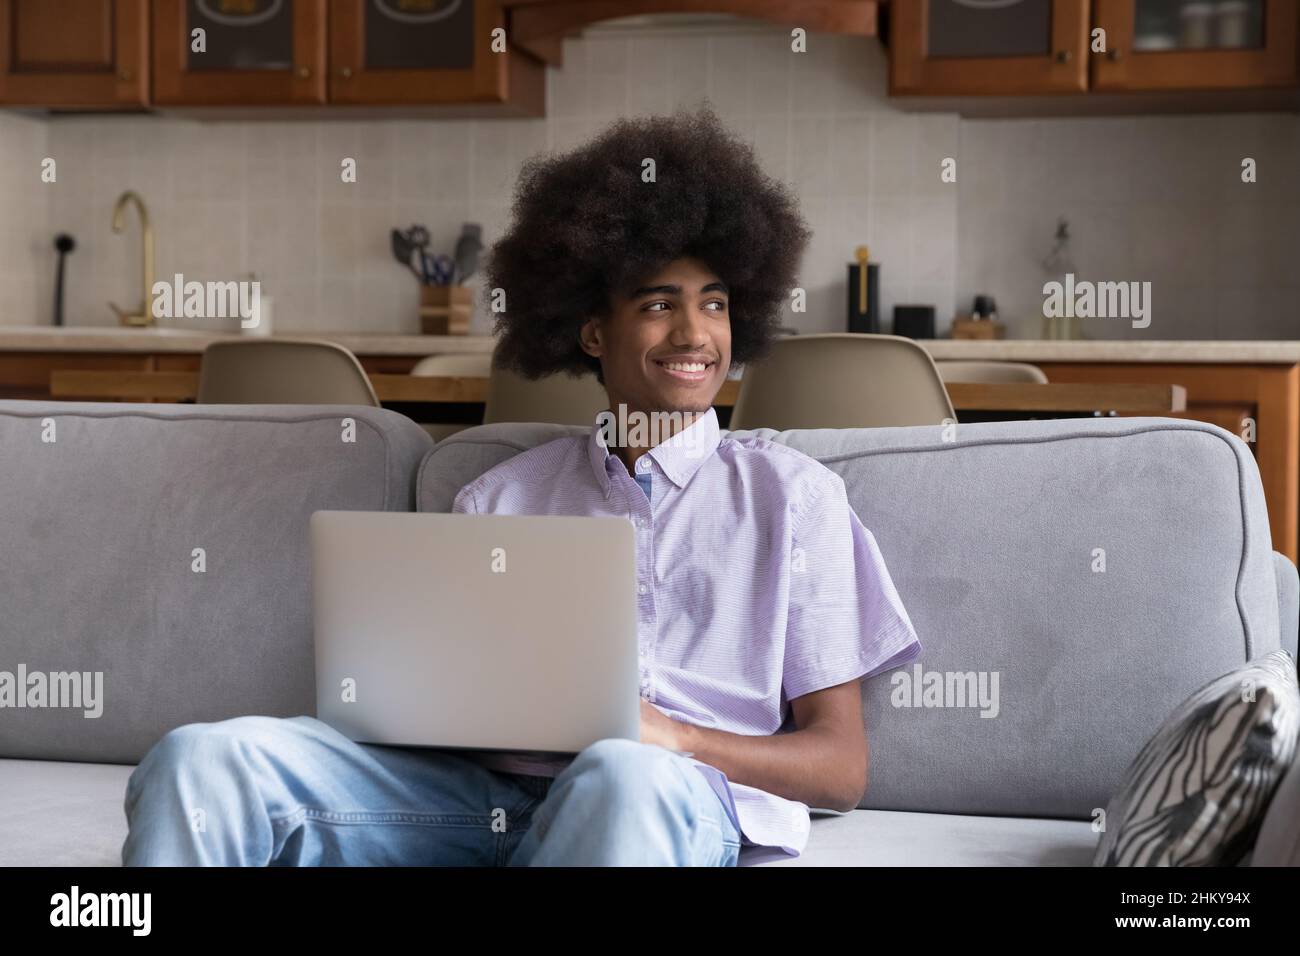 Happy thoughtful Black student guy with Afro hairdo using laptop, Stock Photo